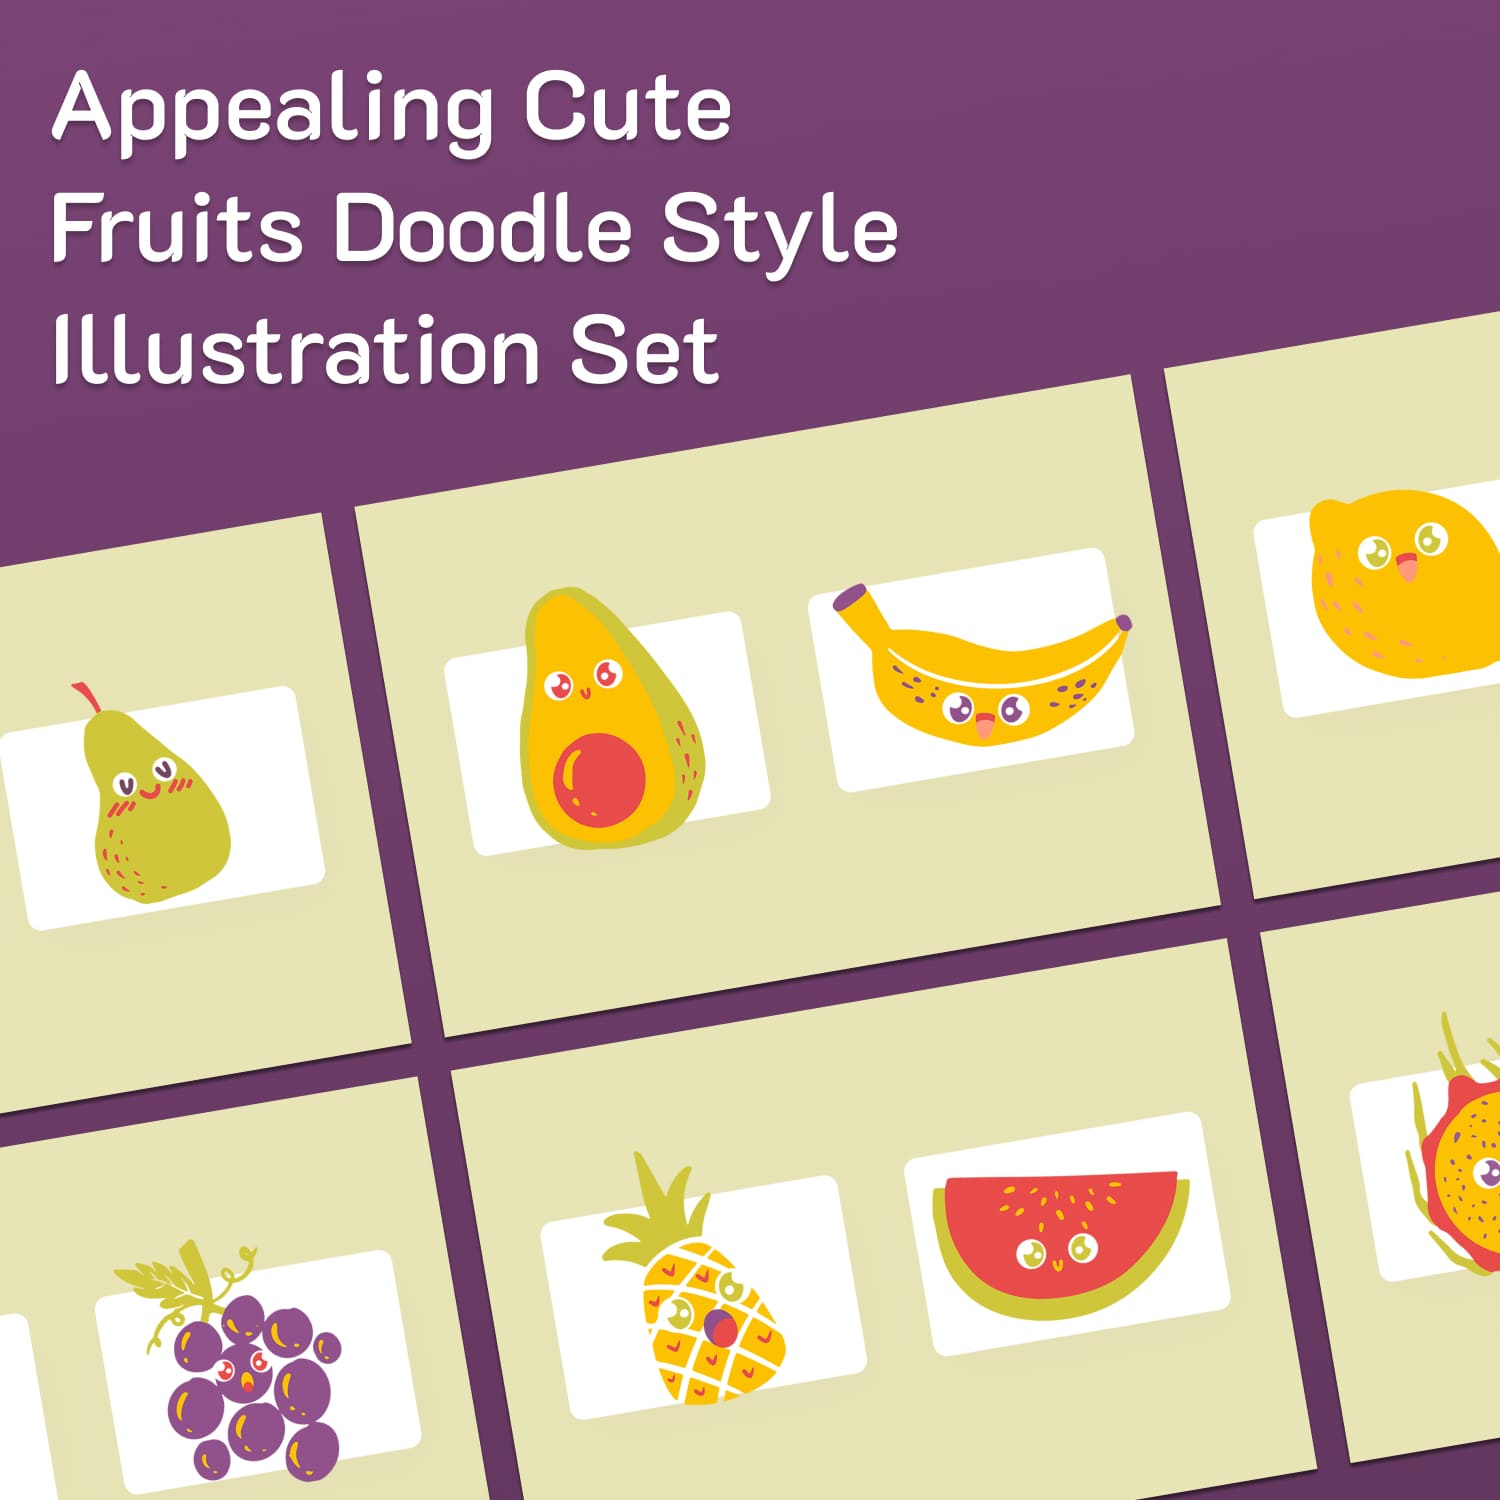 Appealing Cute Fruits Doodle Style Illustration Set.